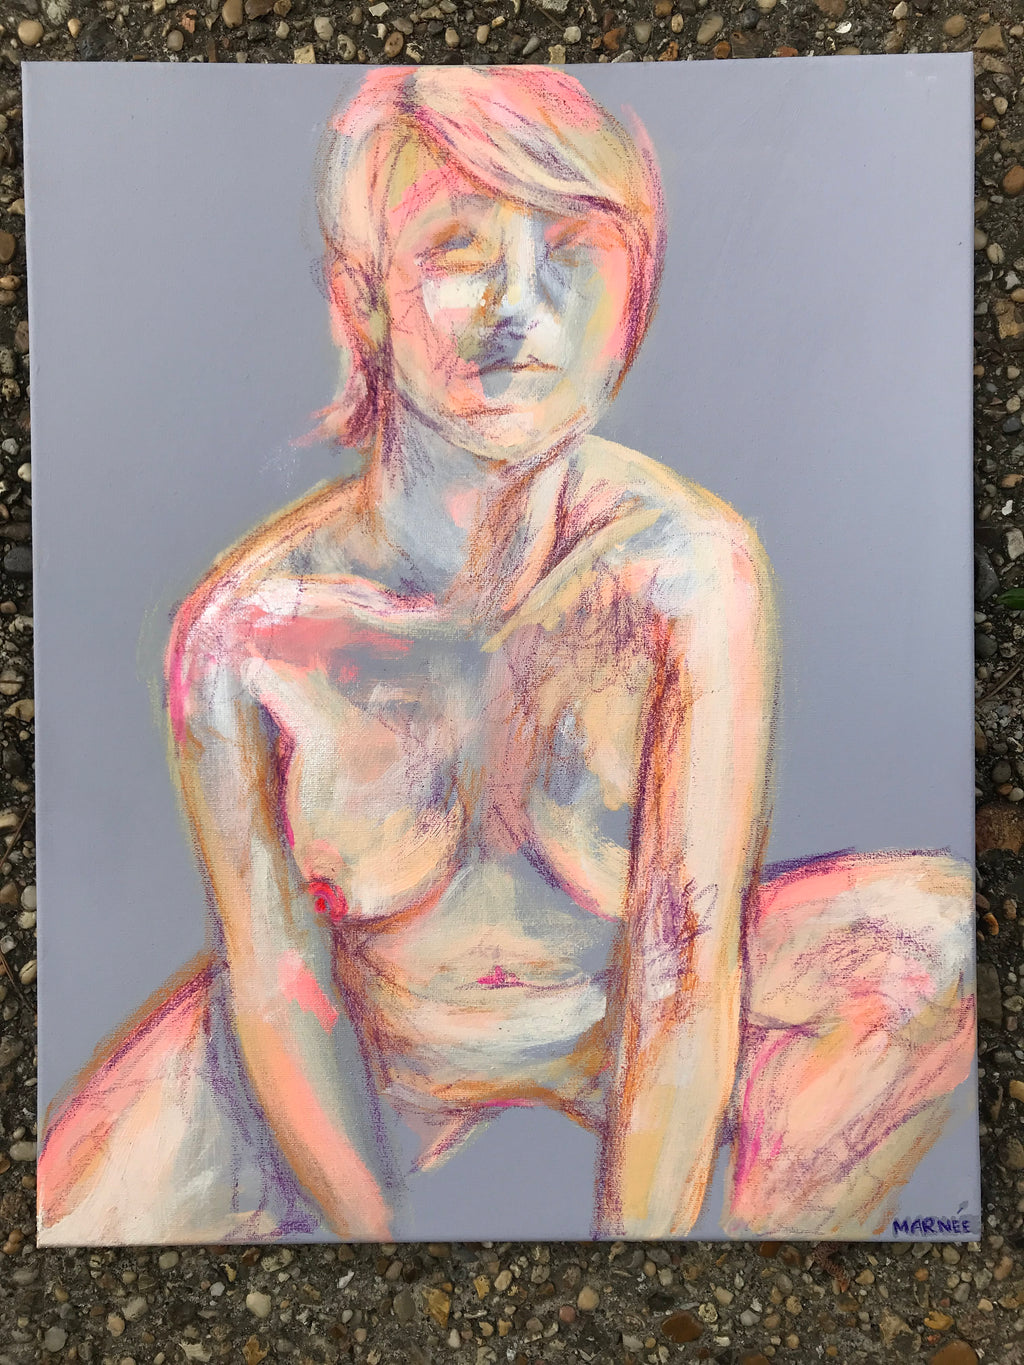 Vibrant female figure acrylic painting on canvas by Marnée. 